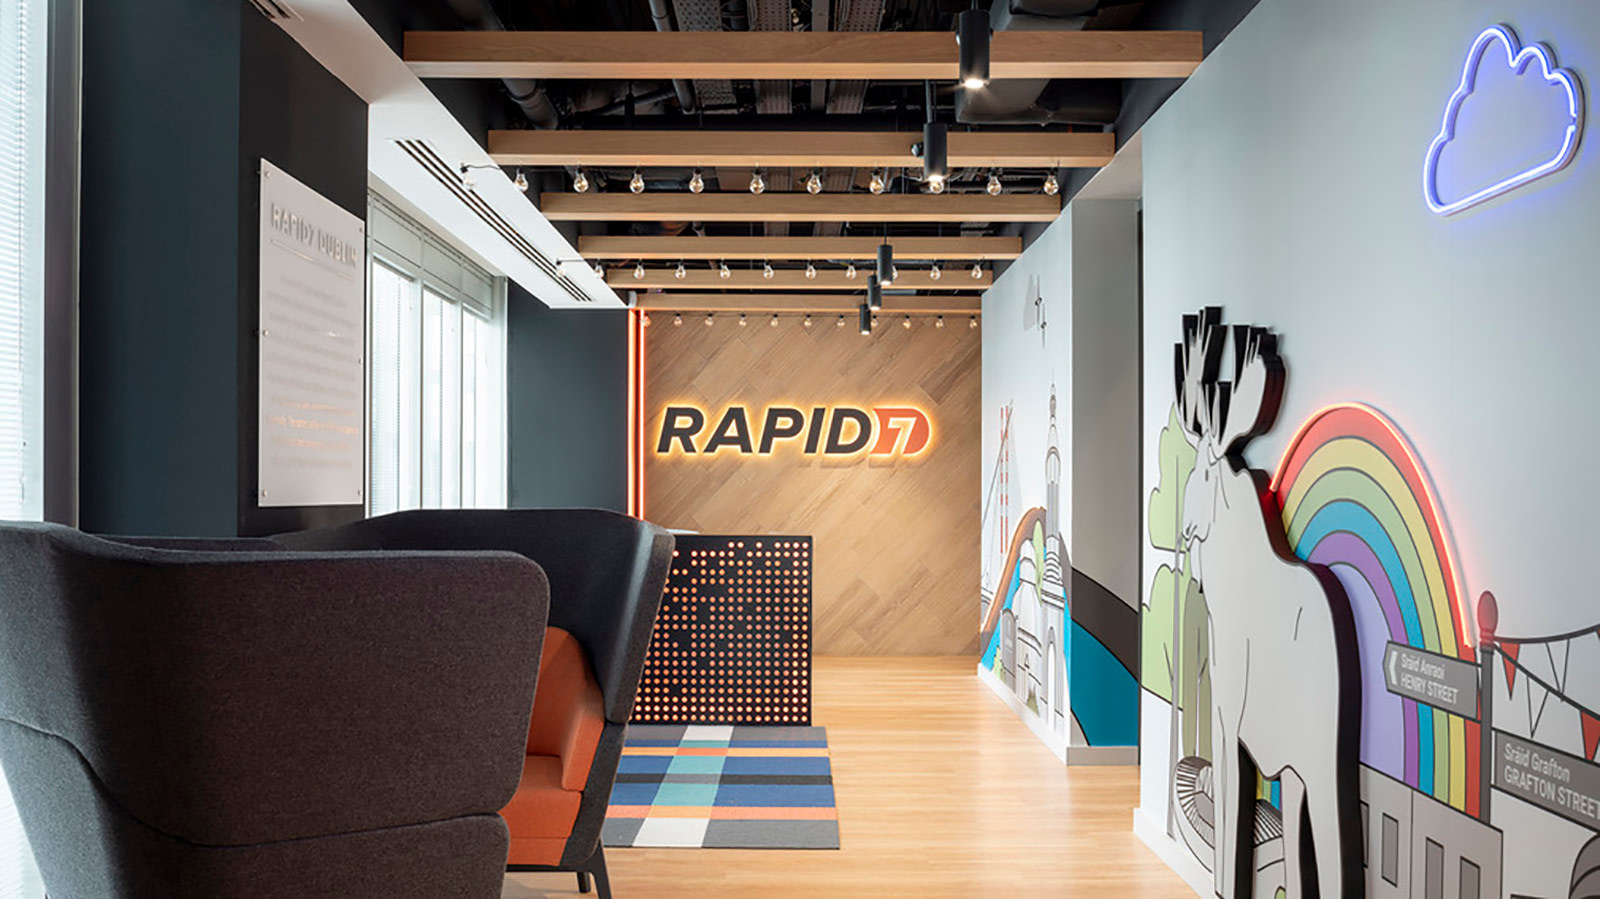 The reception area at Rapid7's Dublin office